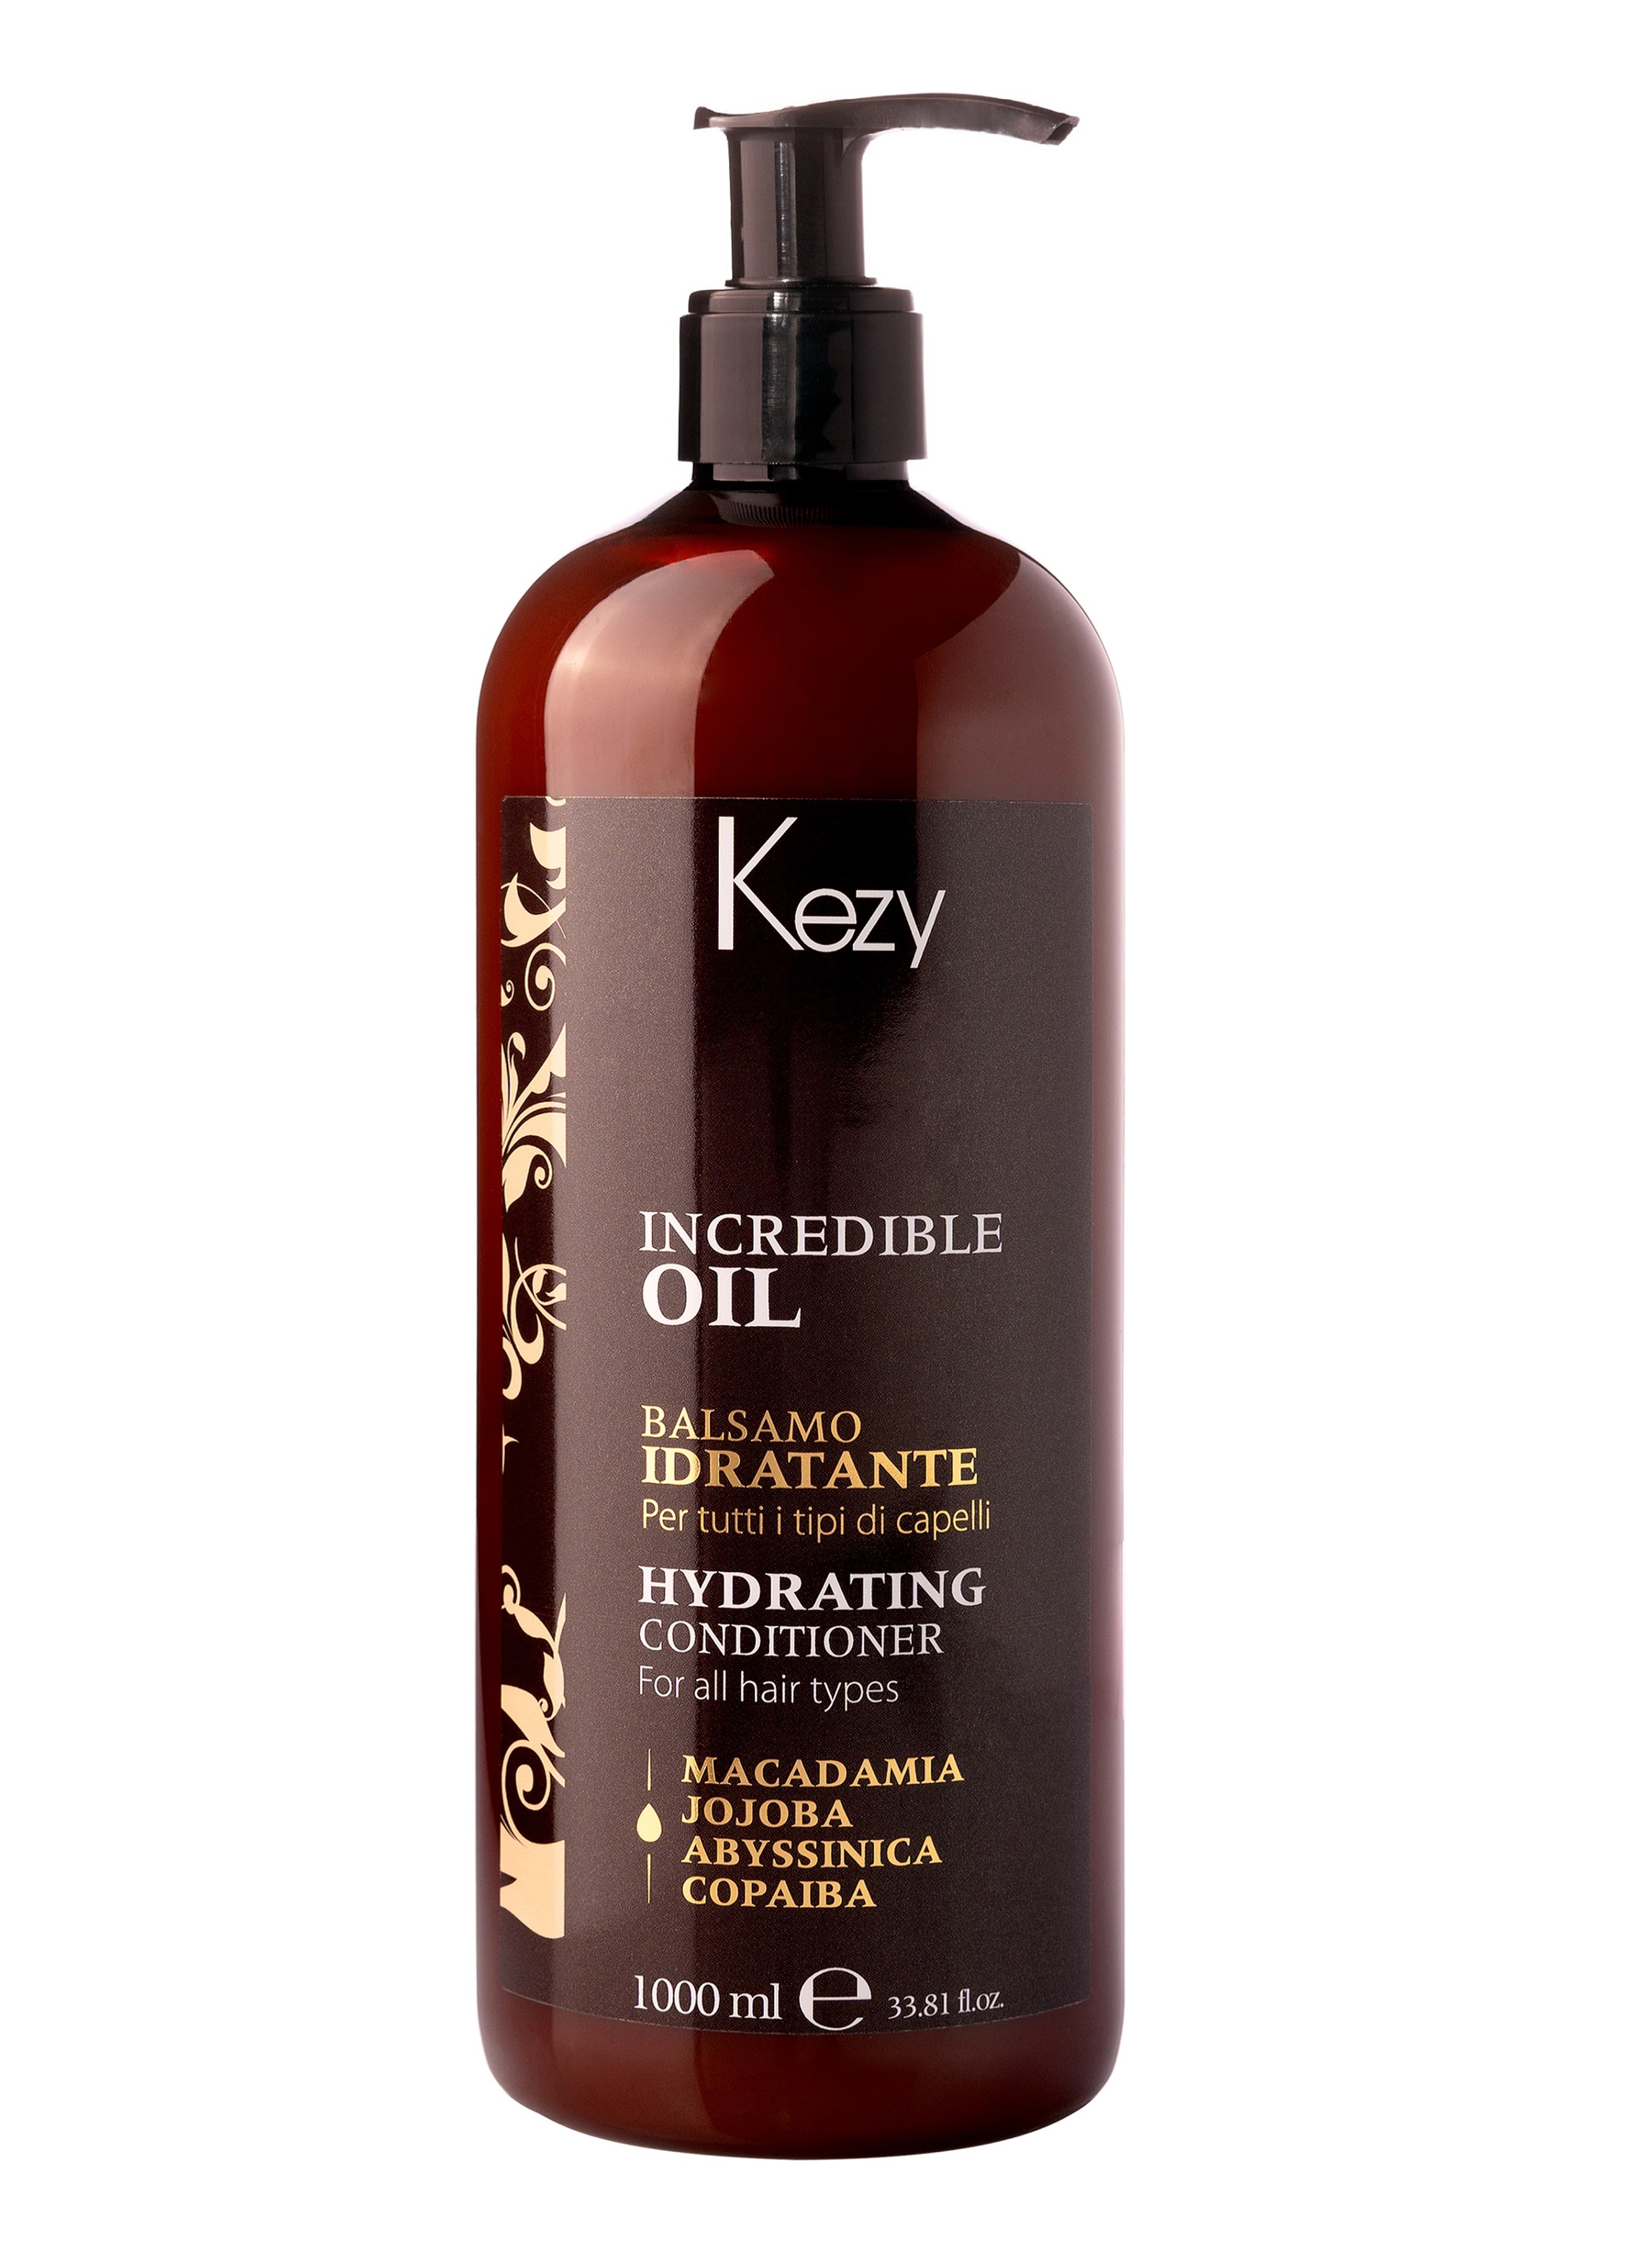 Кондиционер KEZY для всех типов волос увлажняющий 1000мл, Линия INCREDIBLE OIL the incredible journey